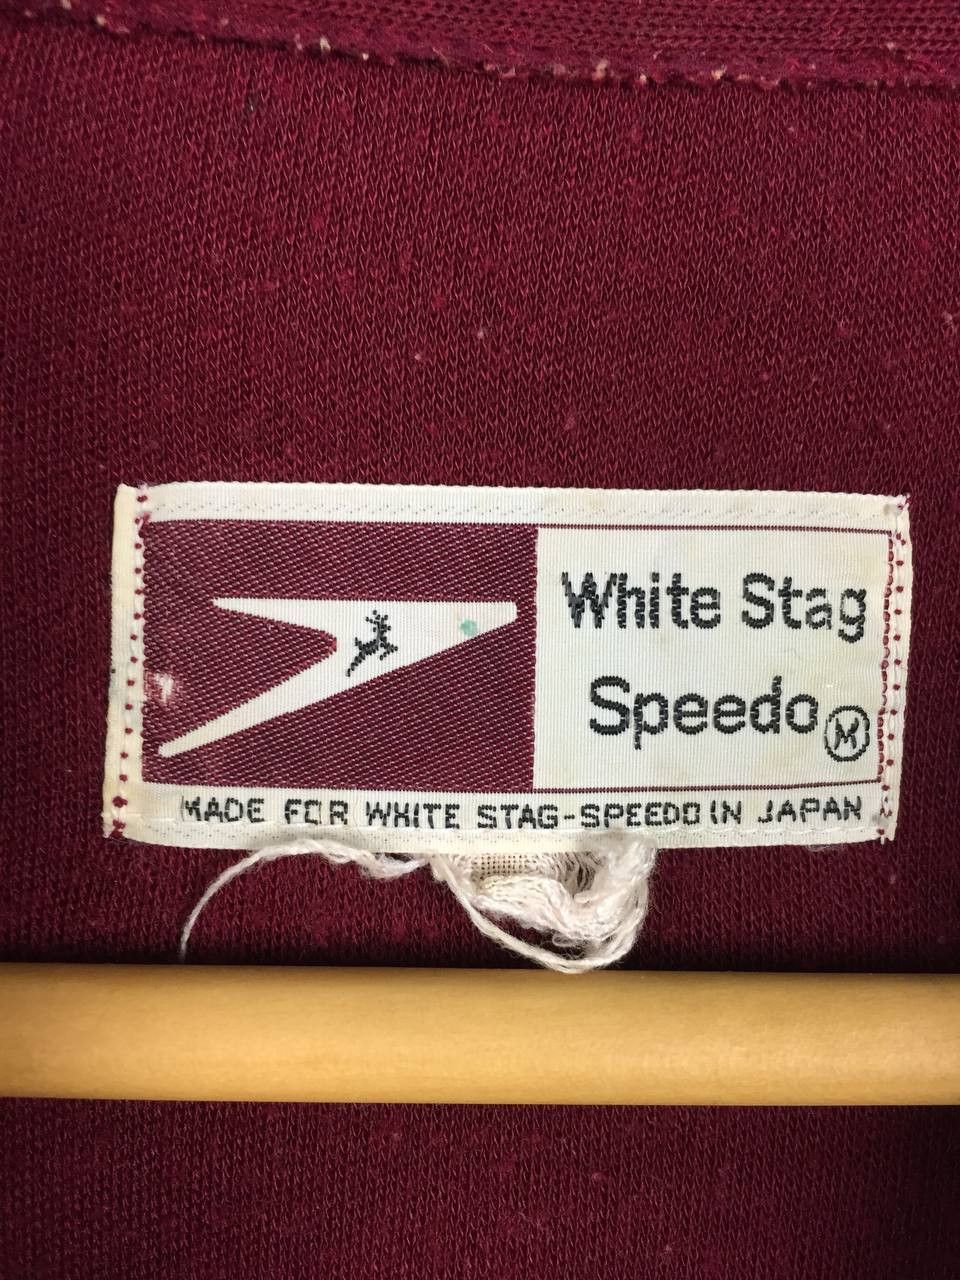 Vintage Vtg White Stag Speedo Stop Patch Trainer Jacket Size US M / EU 48-50 / 2 - 6 Thumbnail